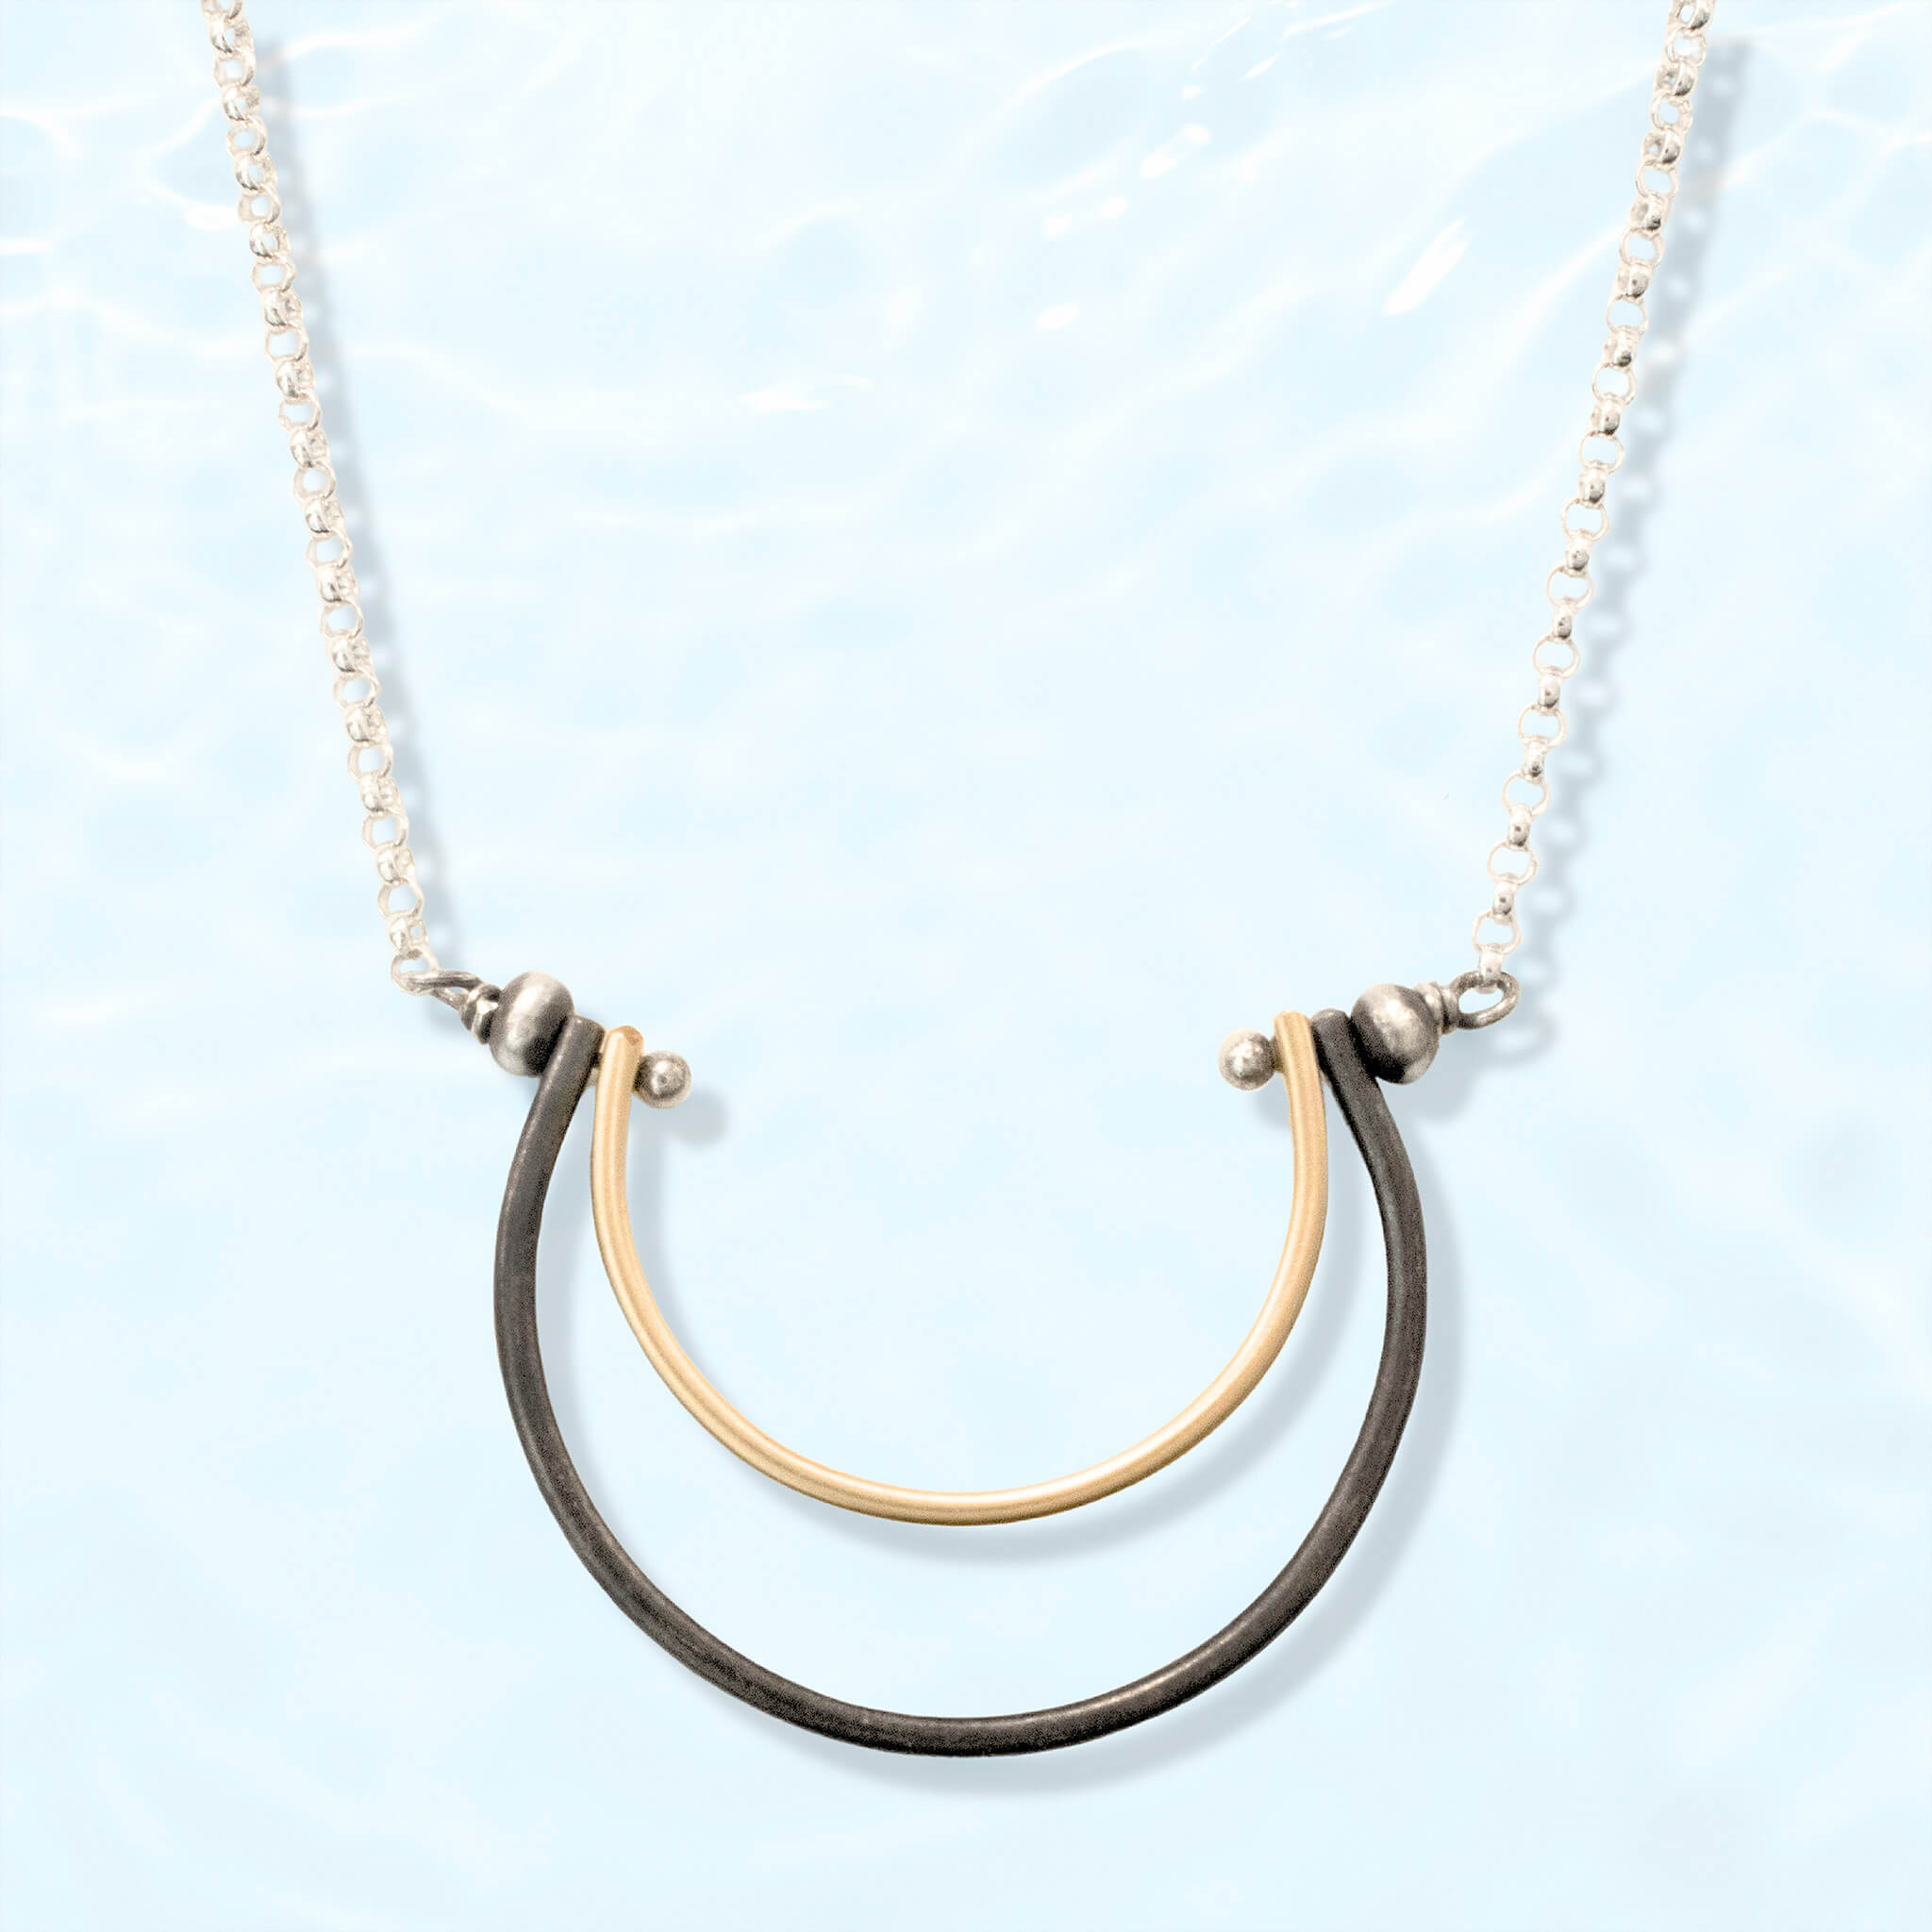 Ecliptic Harmony Necklace - Necklaces